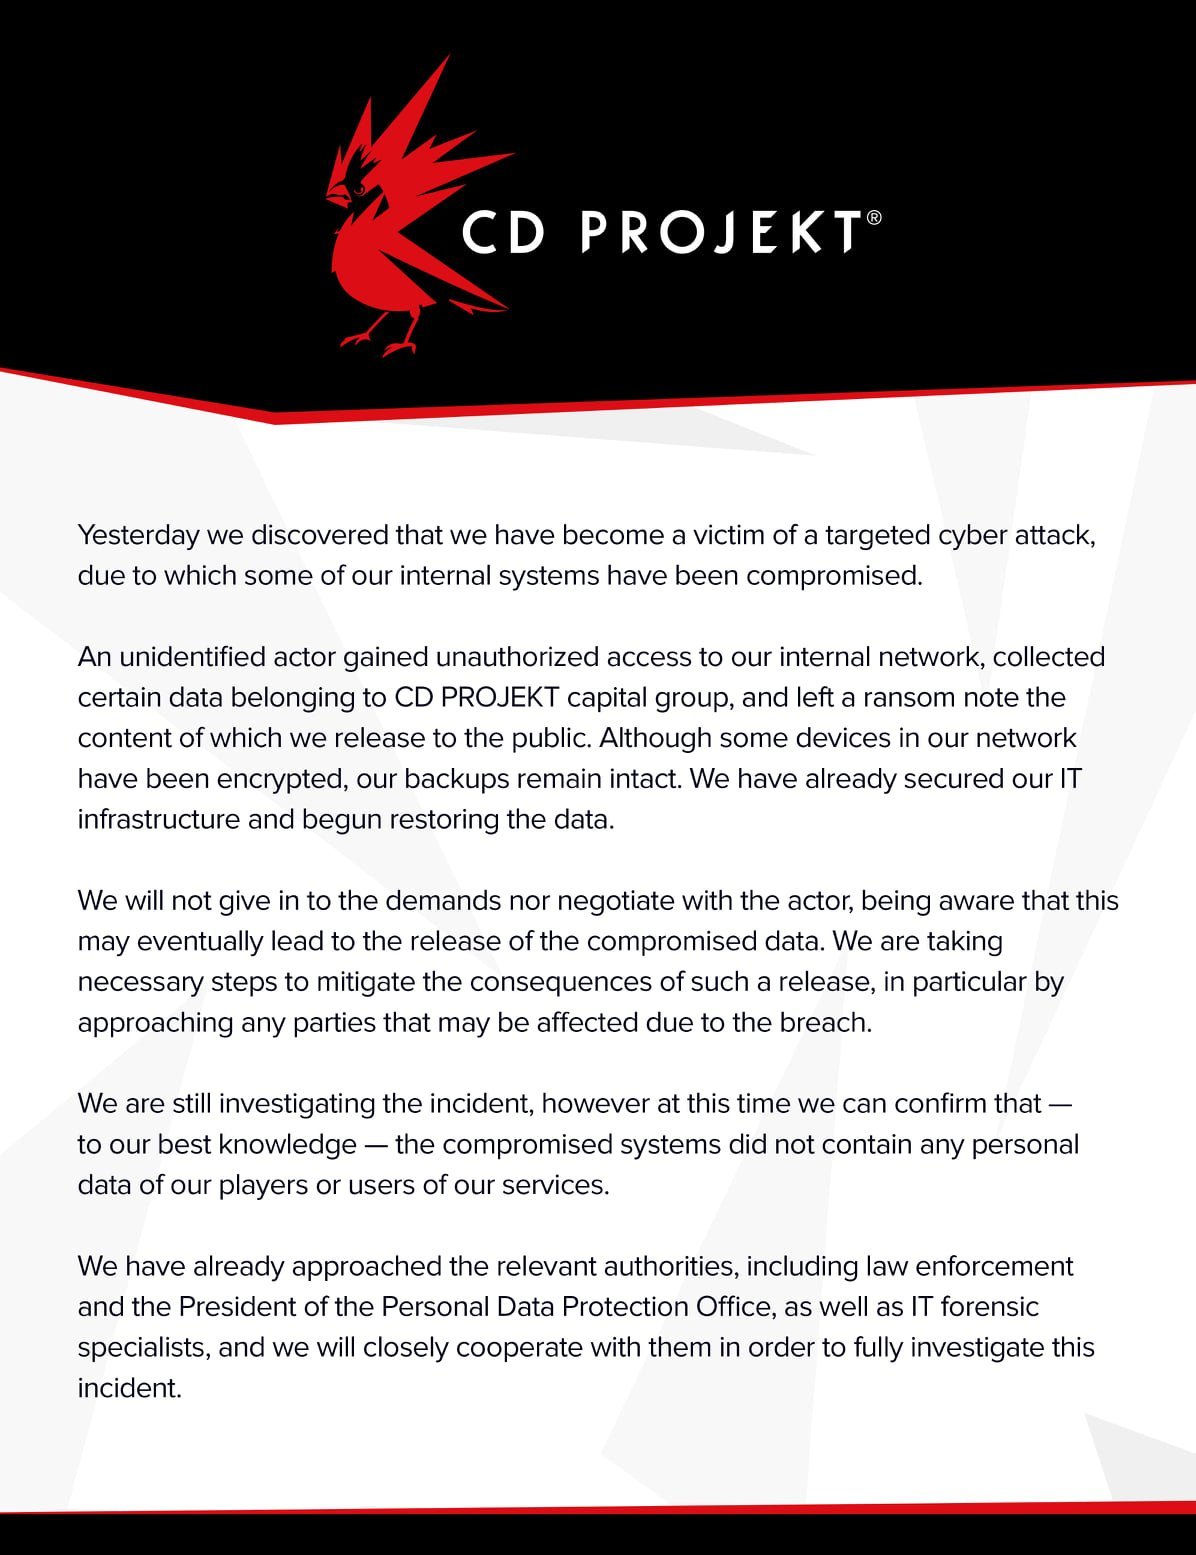 CDPR 2021 Cyber Attack Statement